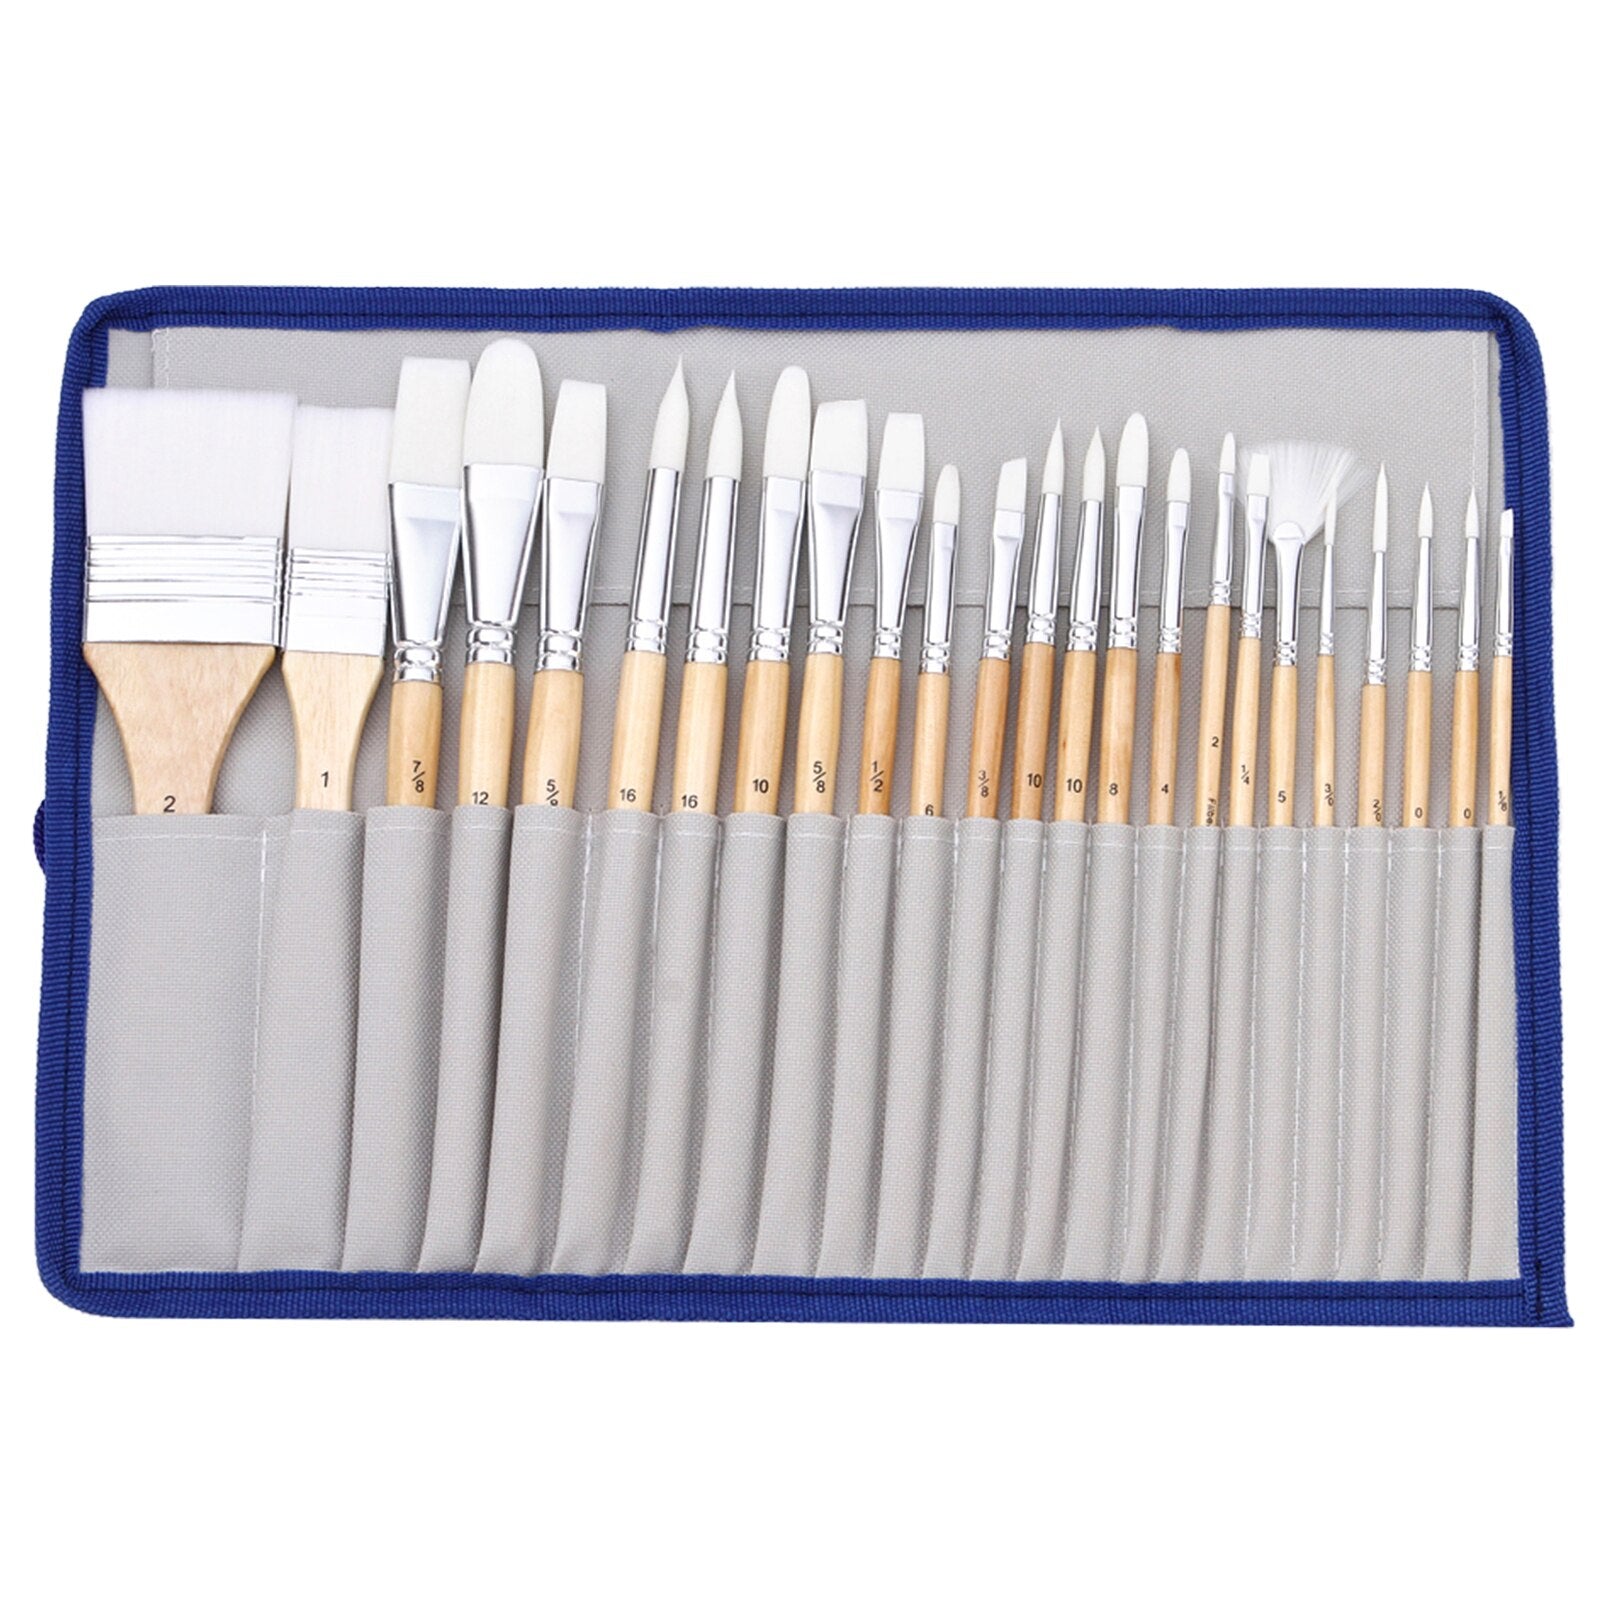 24PCS Paint Brushes Set Kit Artist Professional Nylon Hair Round Brushes With anvas Carry Case